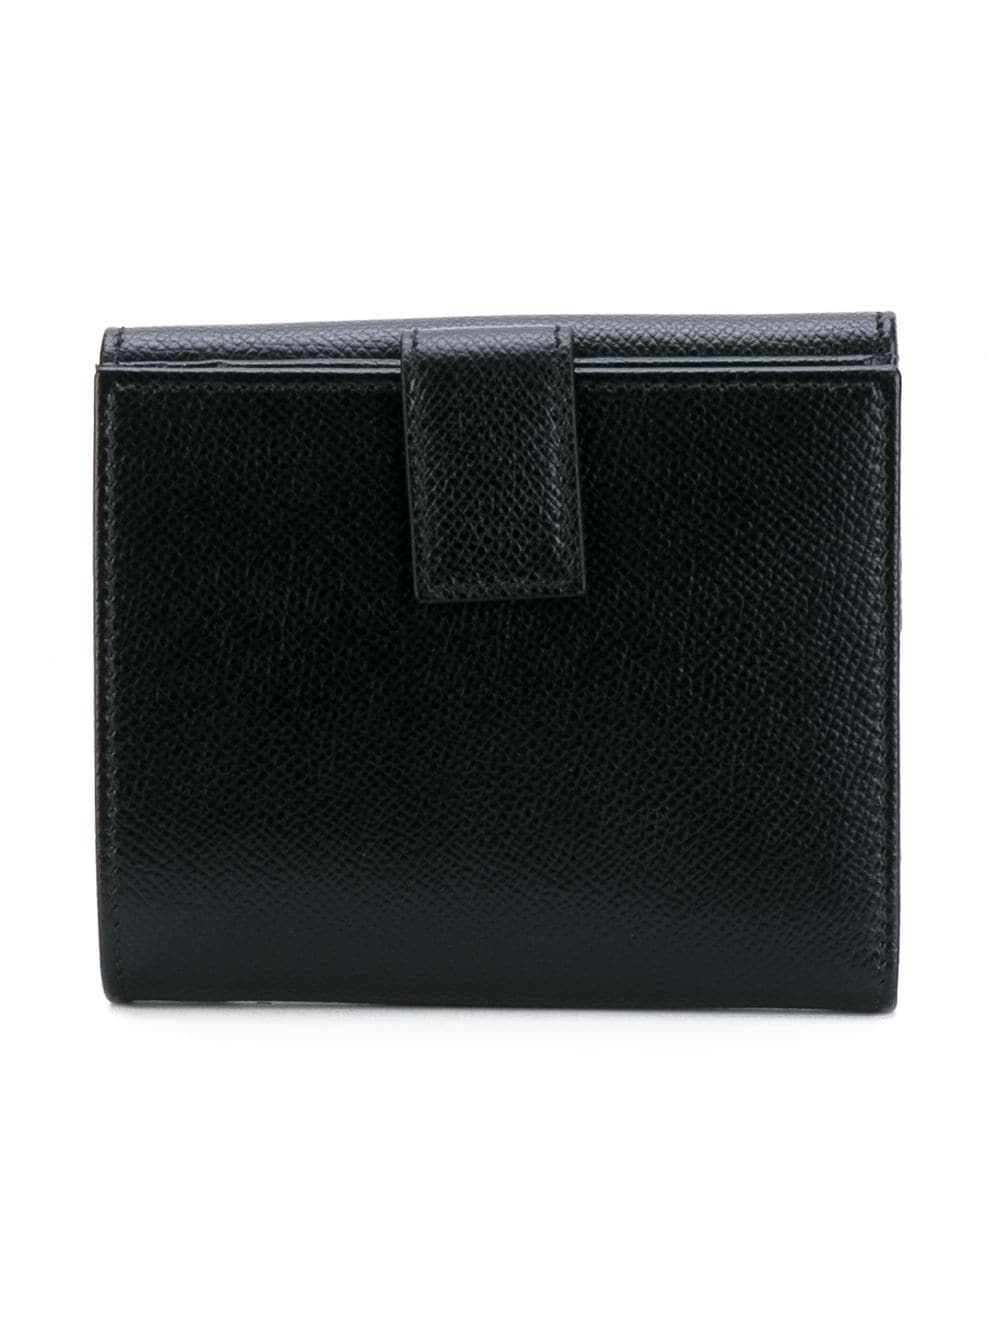 fold-over clasp purse - 2